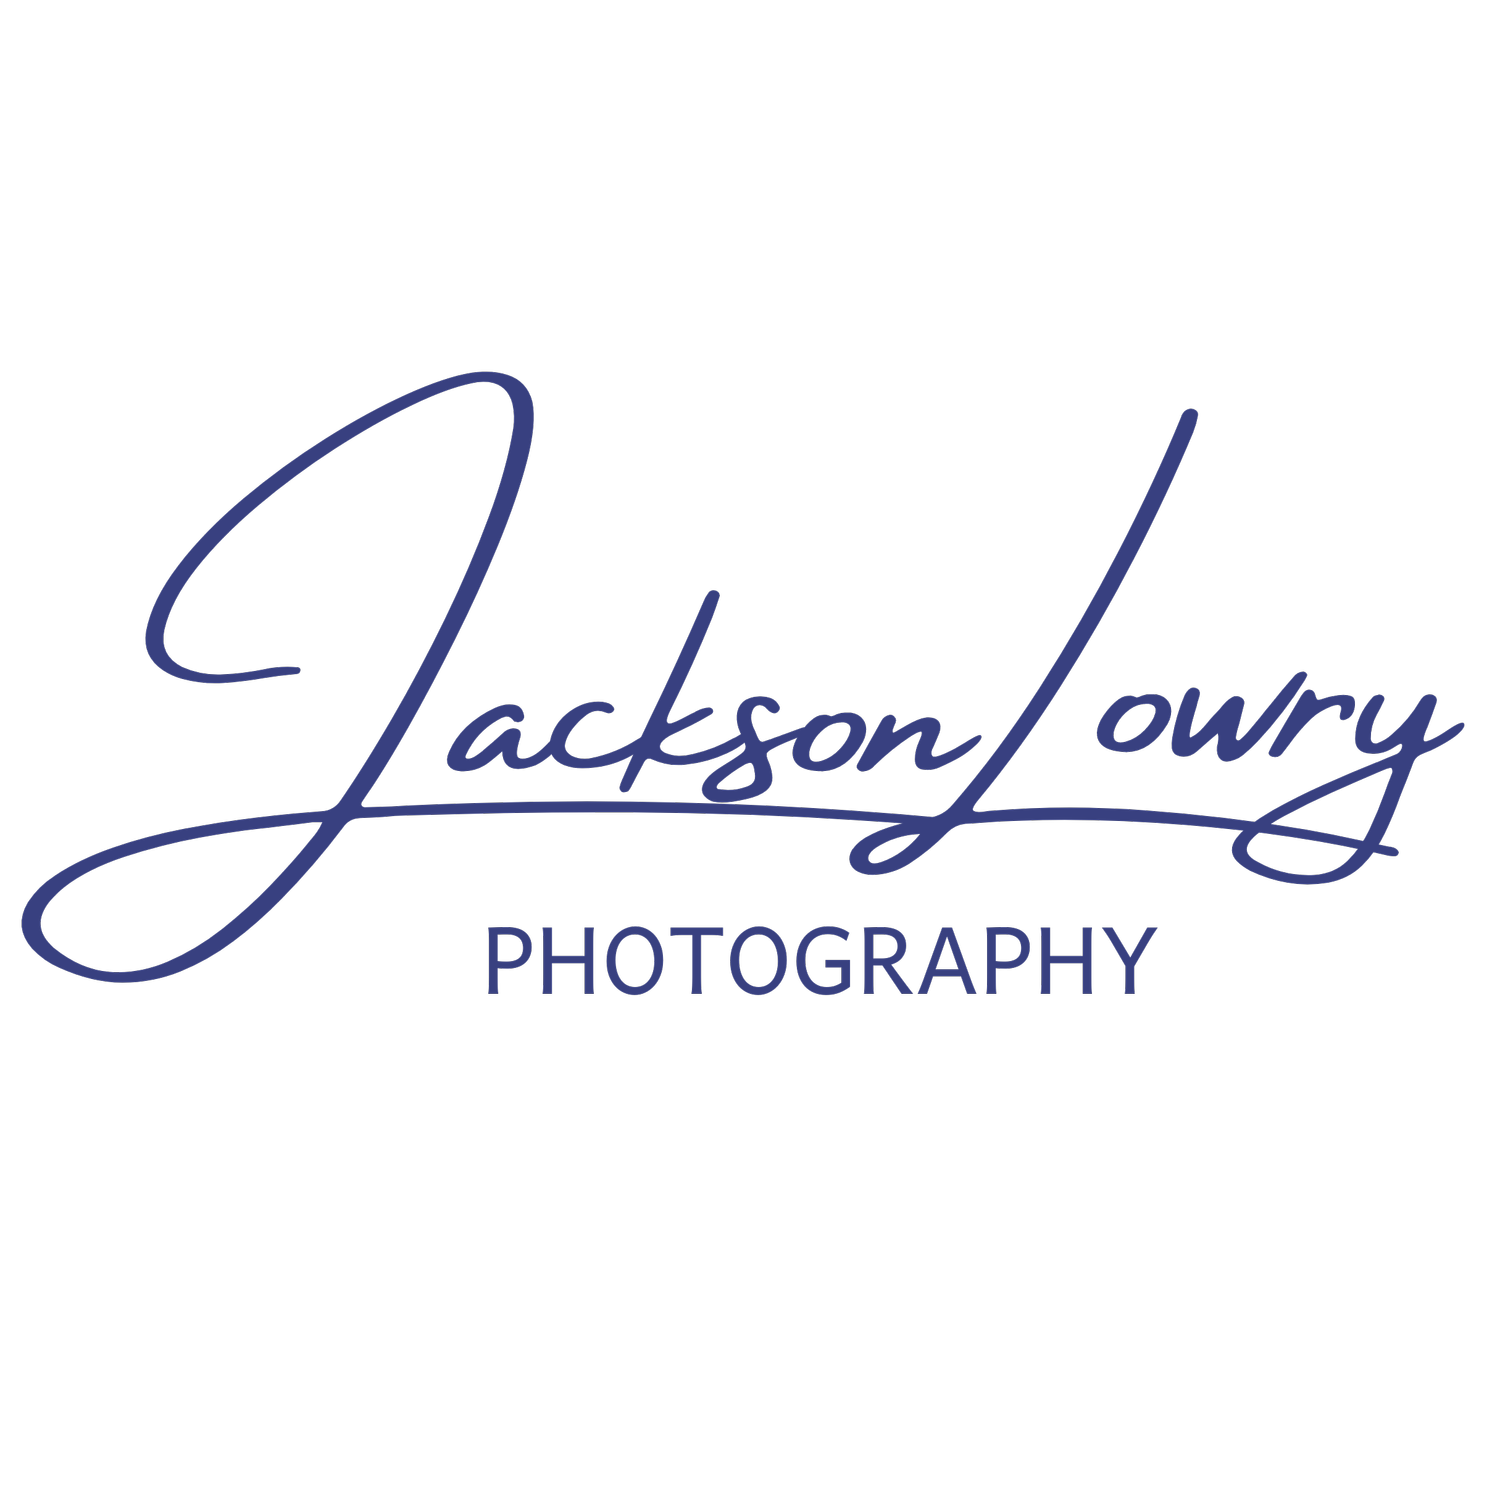 Jackson Lowry Photography